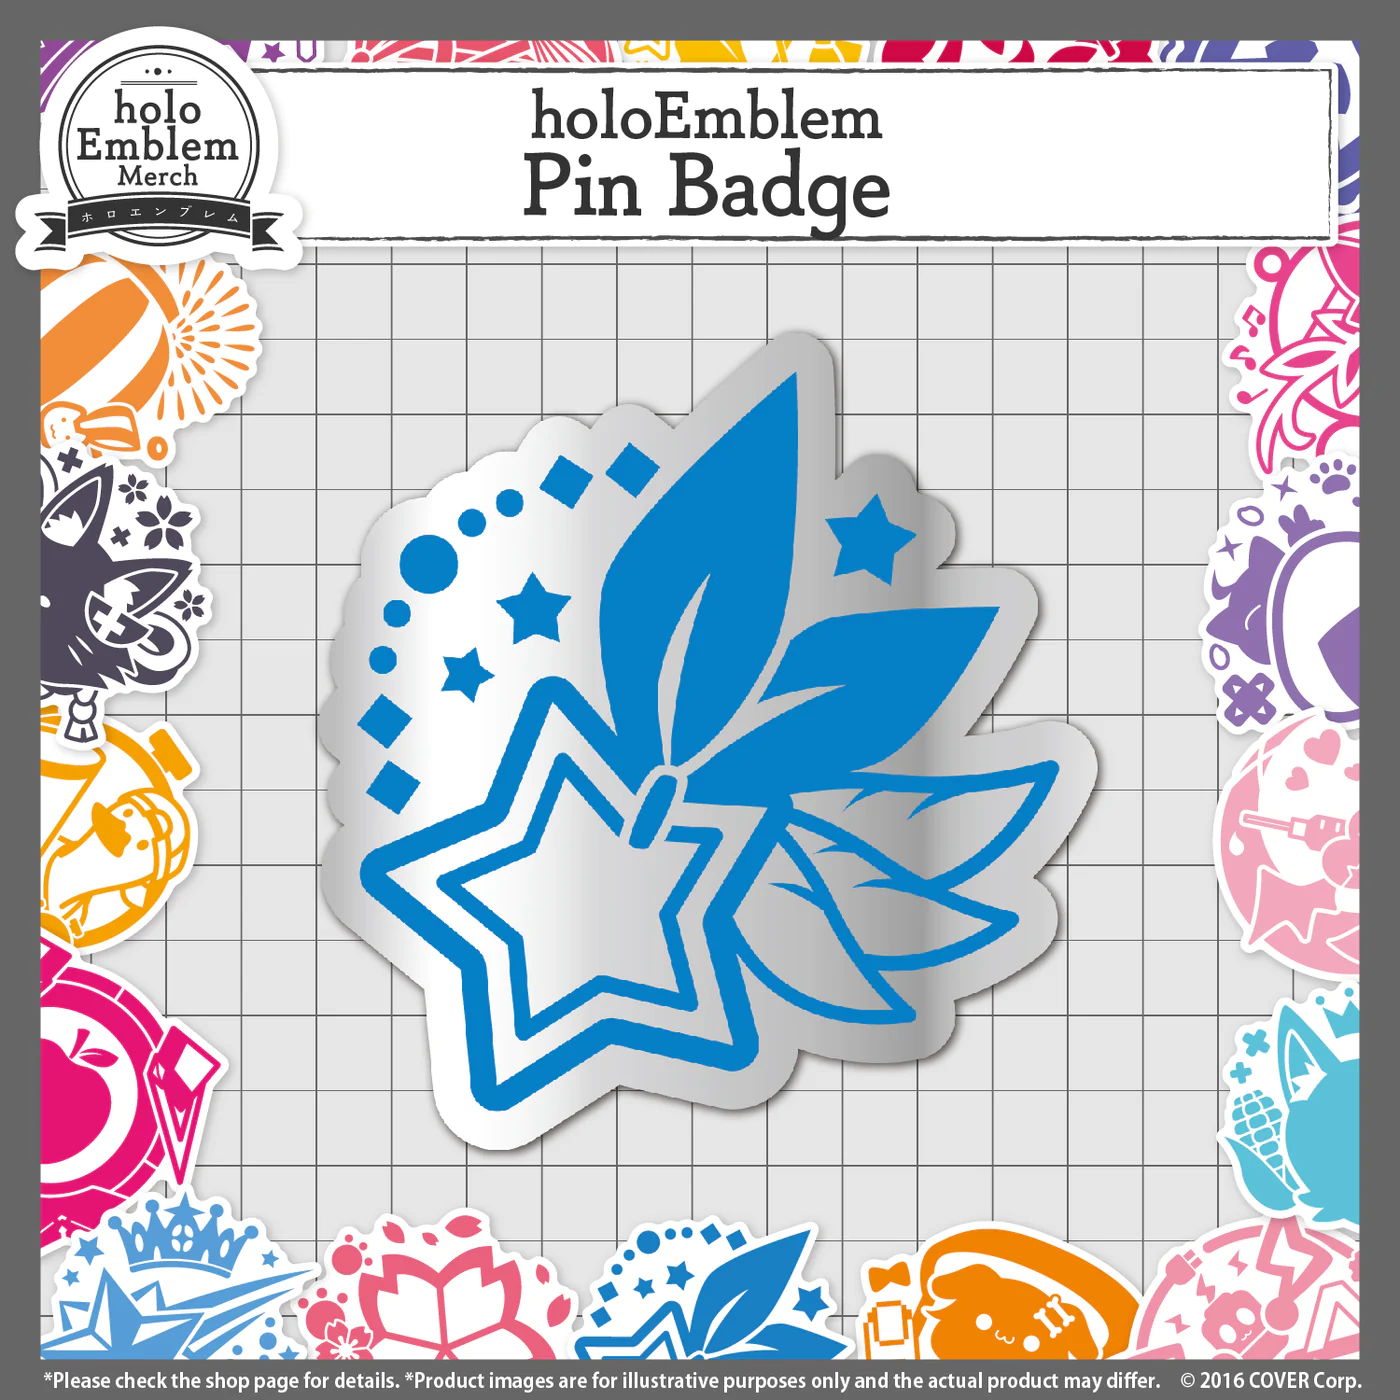 [Pre-order]  holoEmblem Pin Badge Gen 3-5, holoX